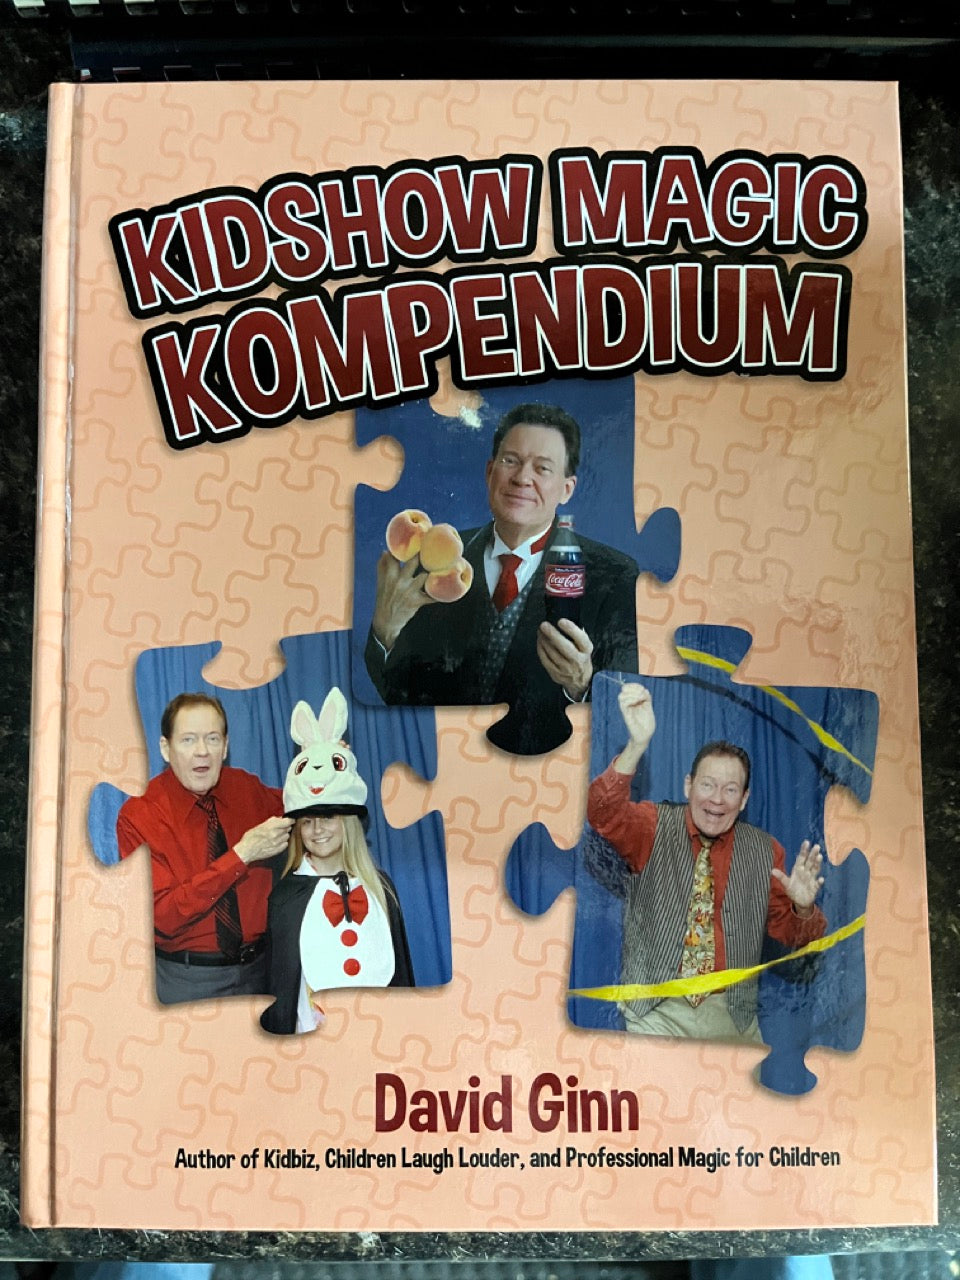 Kidshow Magic Compendium - David Ginn - SIGNED